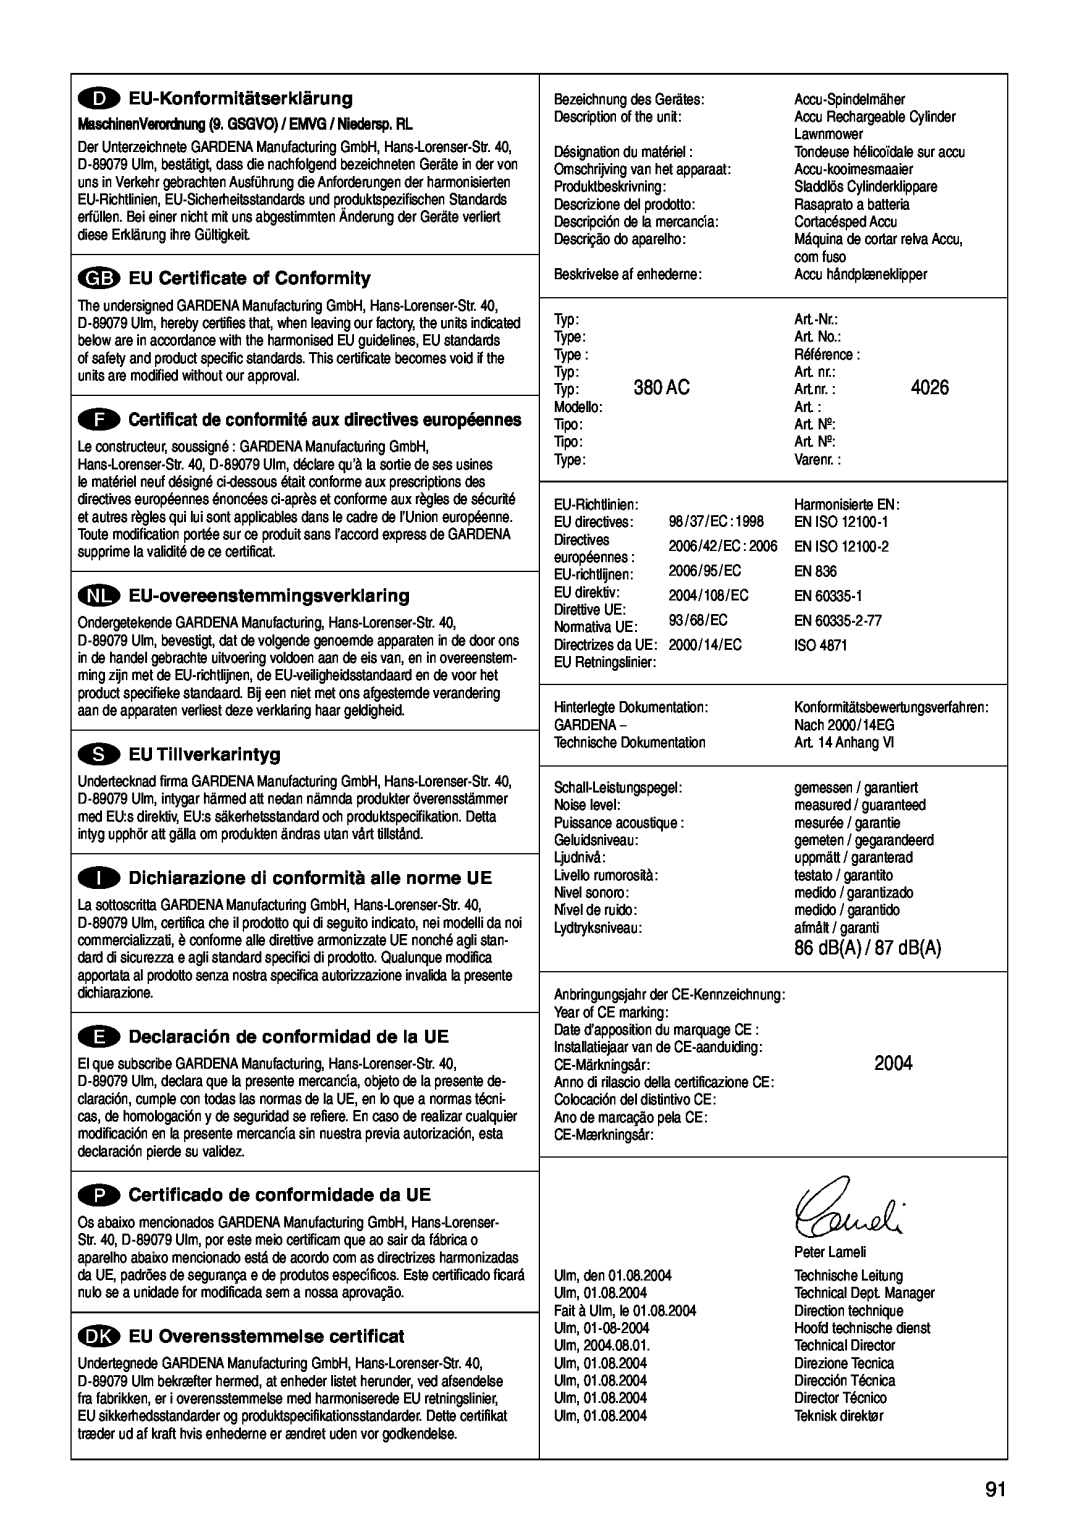 Gardena 380 AC dBA / 87 dBA, 2004, D EU-Konformitätserklärung, G EU Certificate of Conformity, S EU Tillverkarintyg 